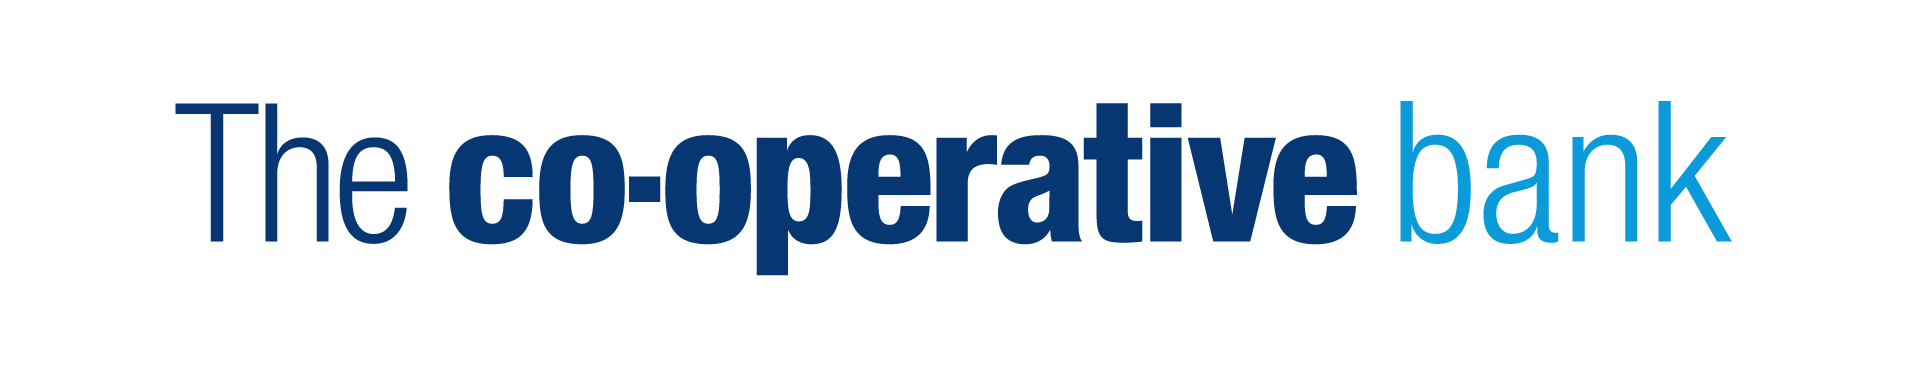 The Co-operative Bank logo